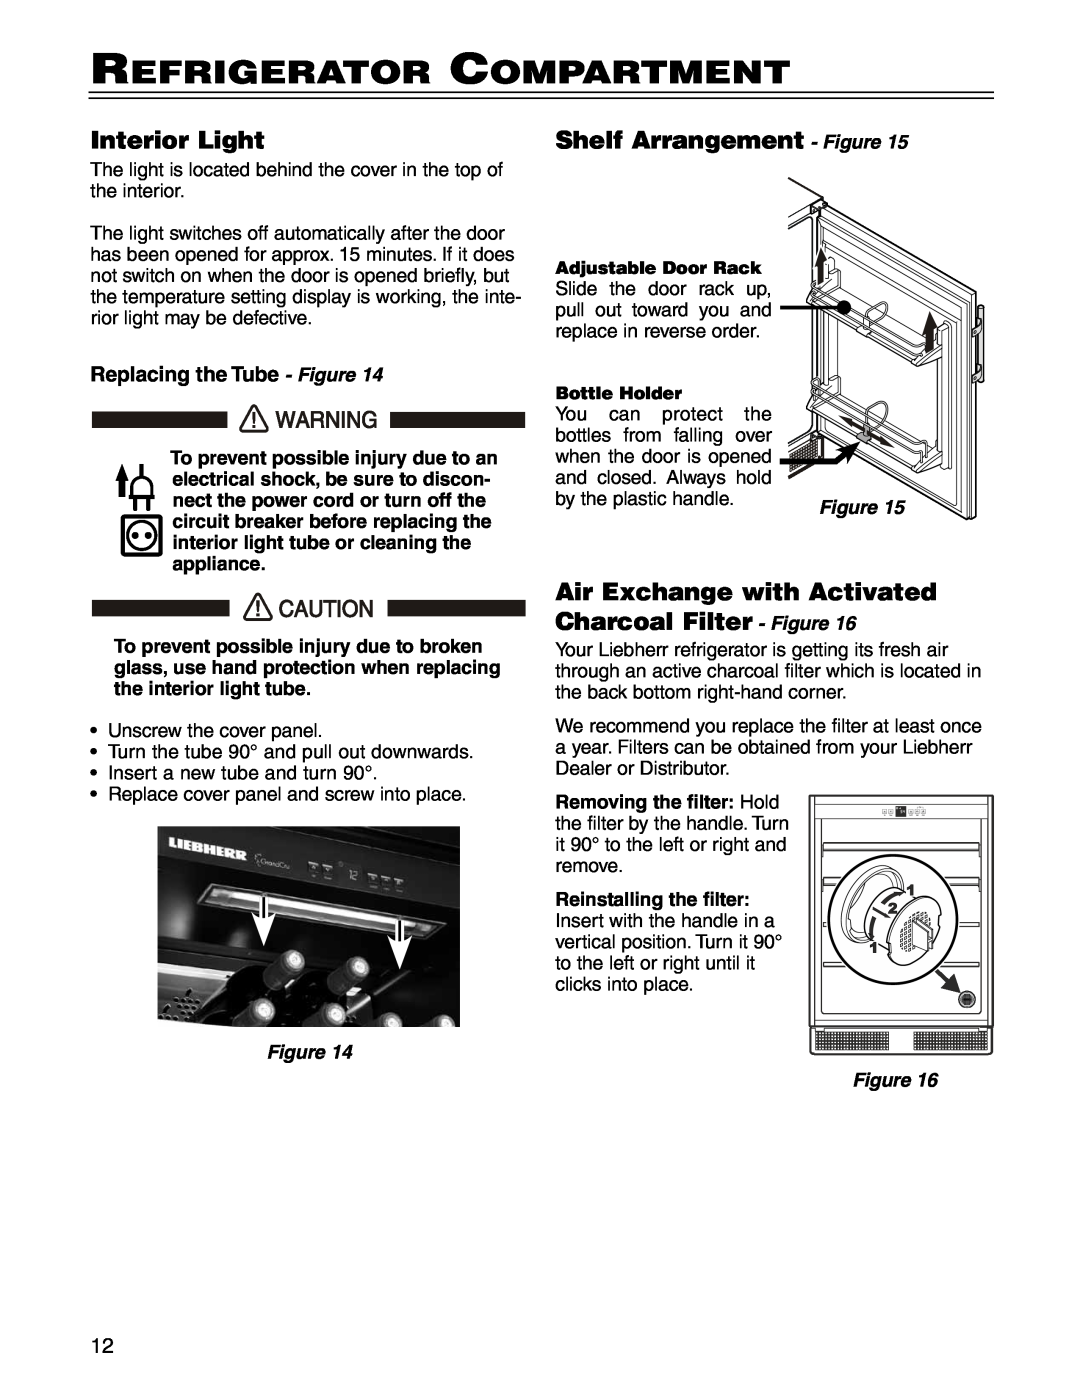 Liebherr RO 500 manual Refrigerator Compartment, Interior Light, Shelf Arrangement - Figure, Replacing the Tube - Figure 